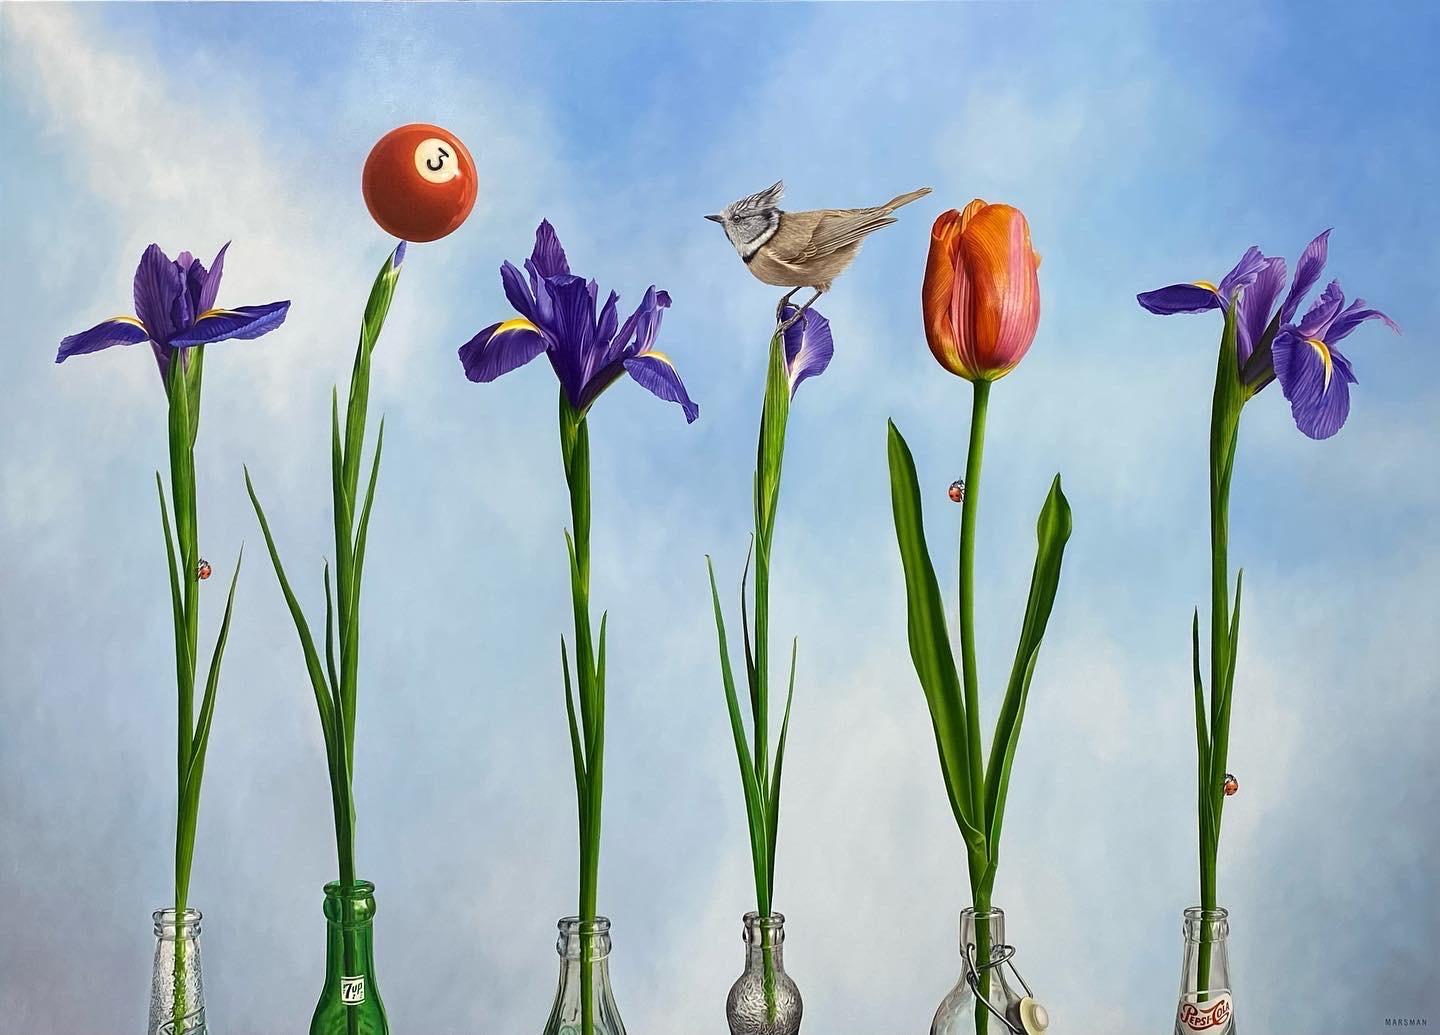 JP Marsman Figurative Painting - Bird, ladybird & flowers- 21st Century Contemporary hyper realistic Painting